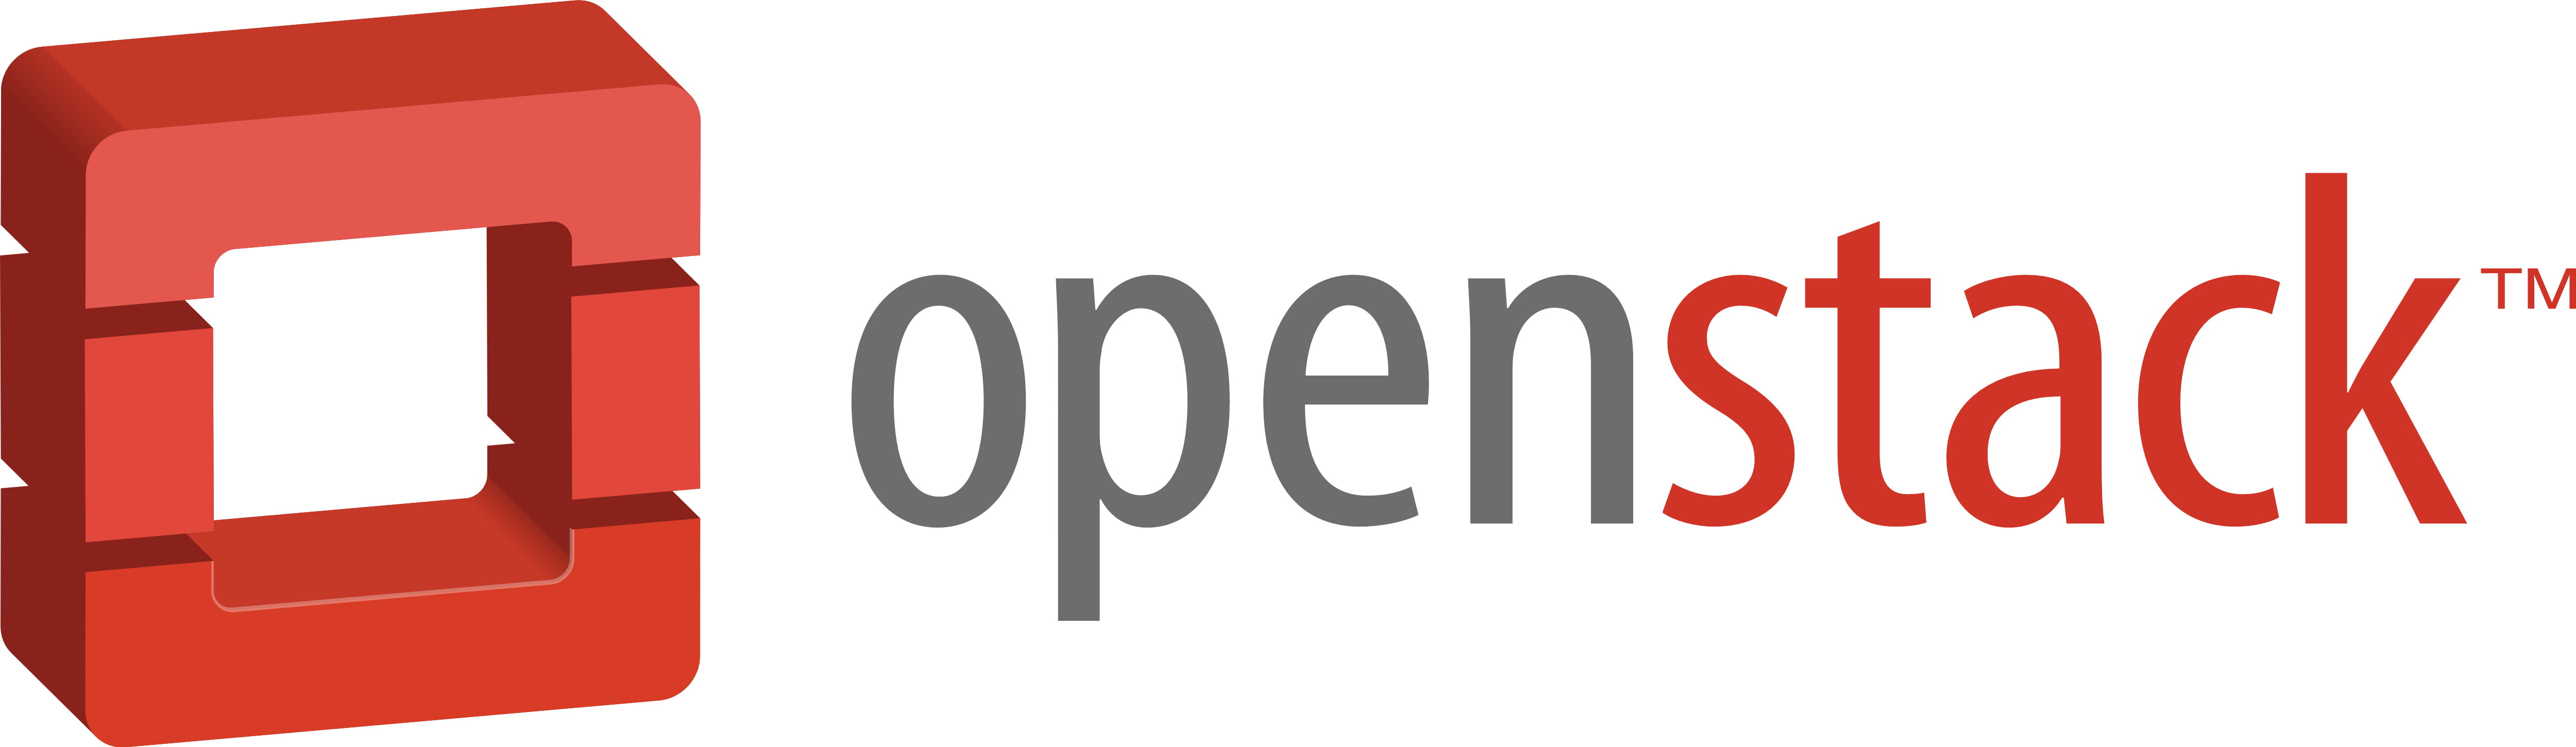 http://logos-download.com/wp-content/uploads/2016/10/OpenStack_logo.png